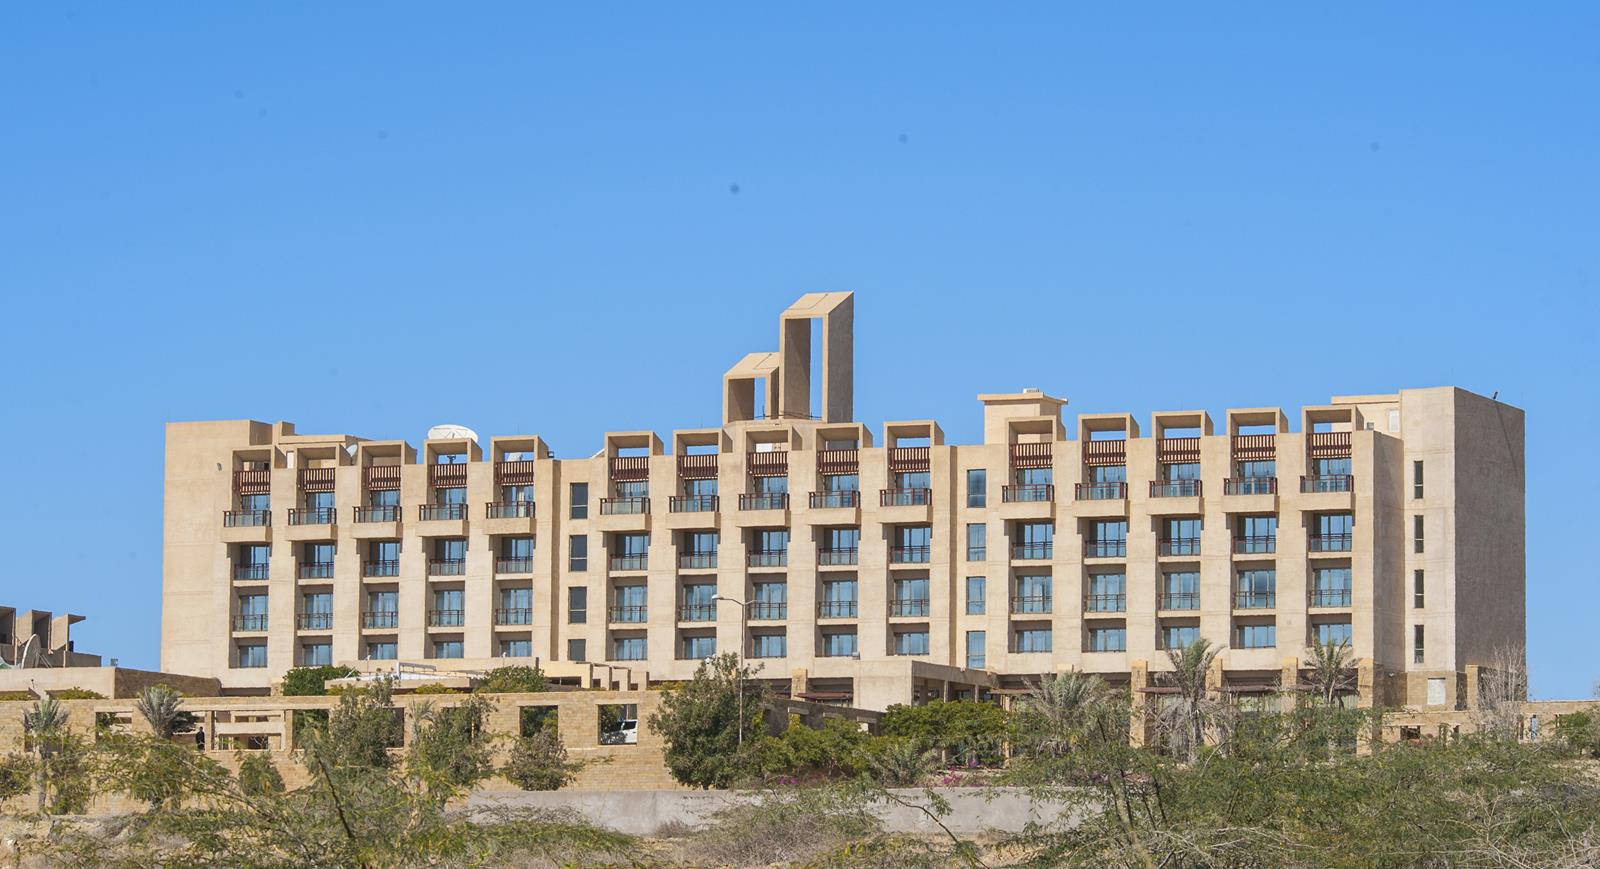 Zaver Pearl-Continental Hotel, Gwadar, Balochistan, Pakistan